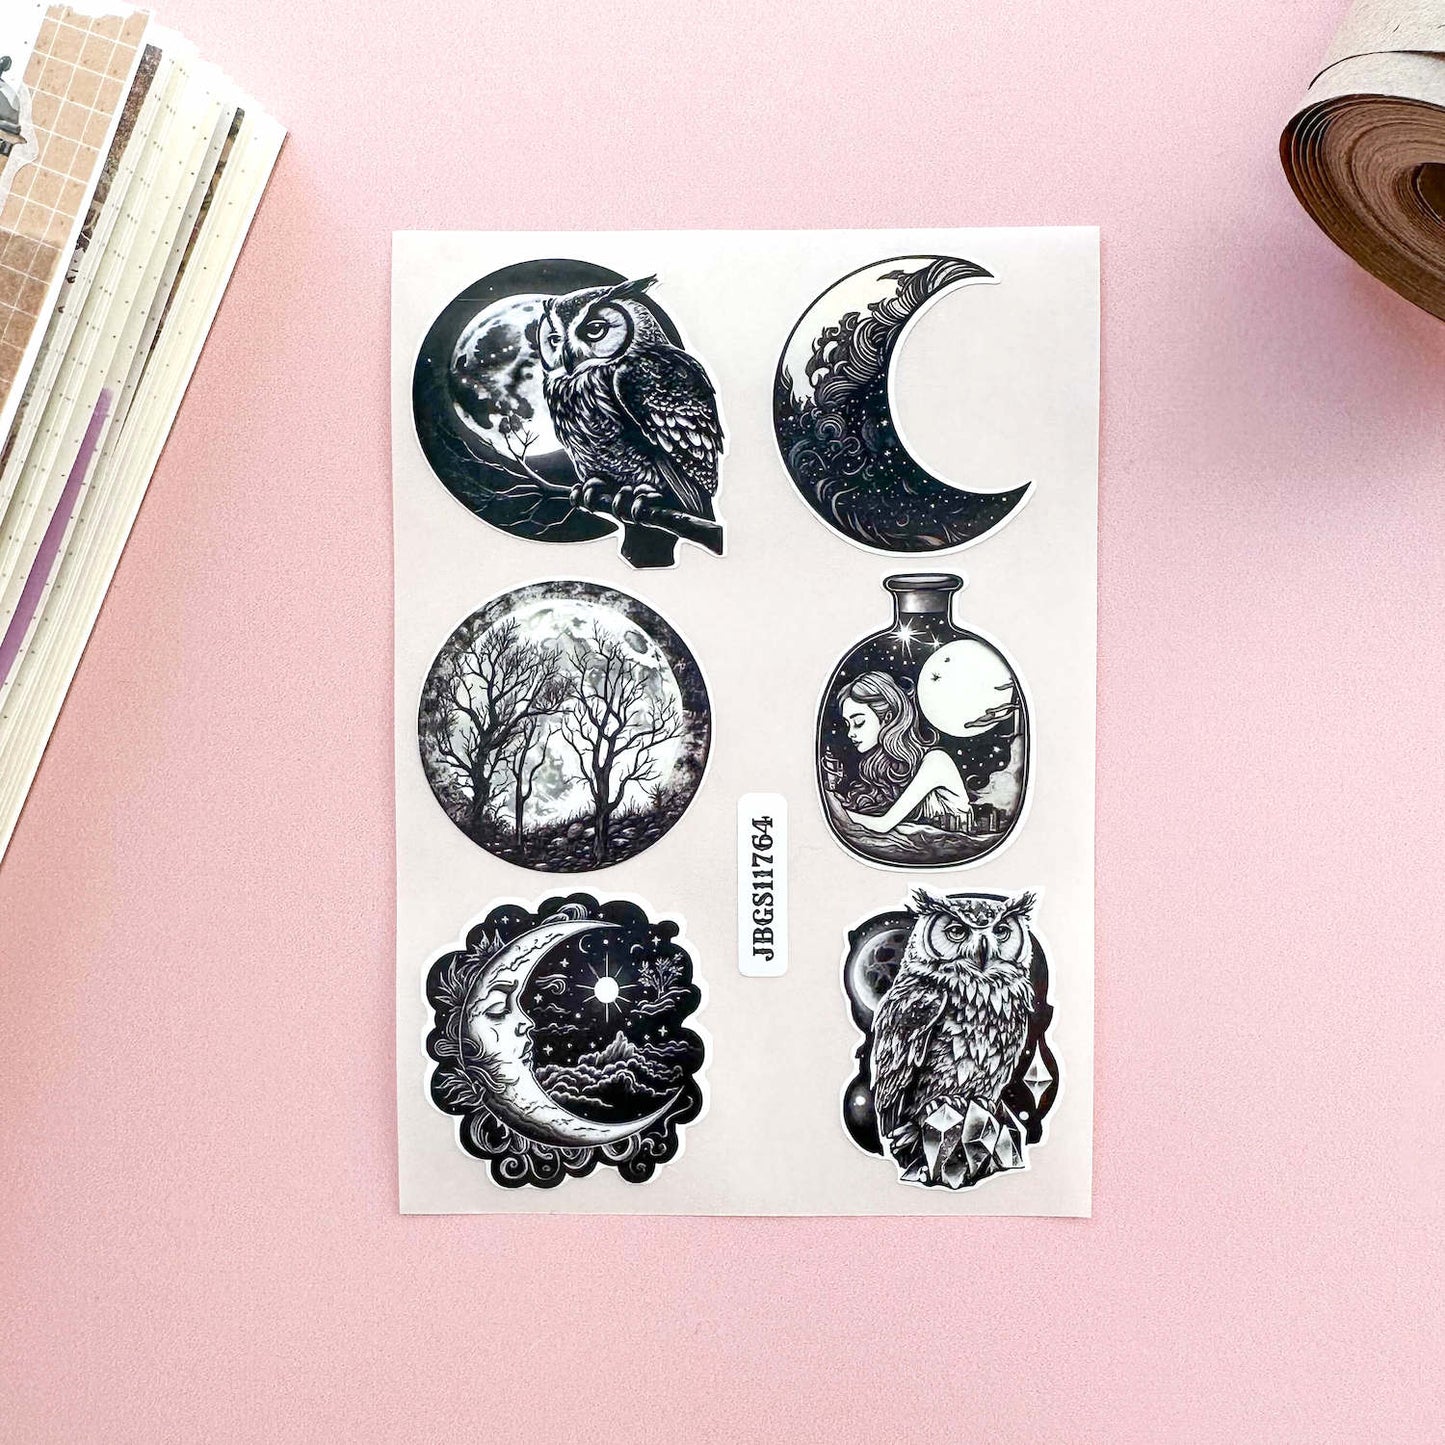 Celestial oddities 3 sticker sheet - vinyl. black and white illustrations